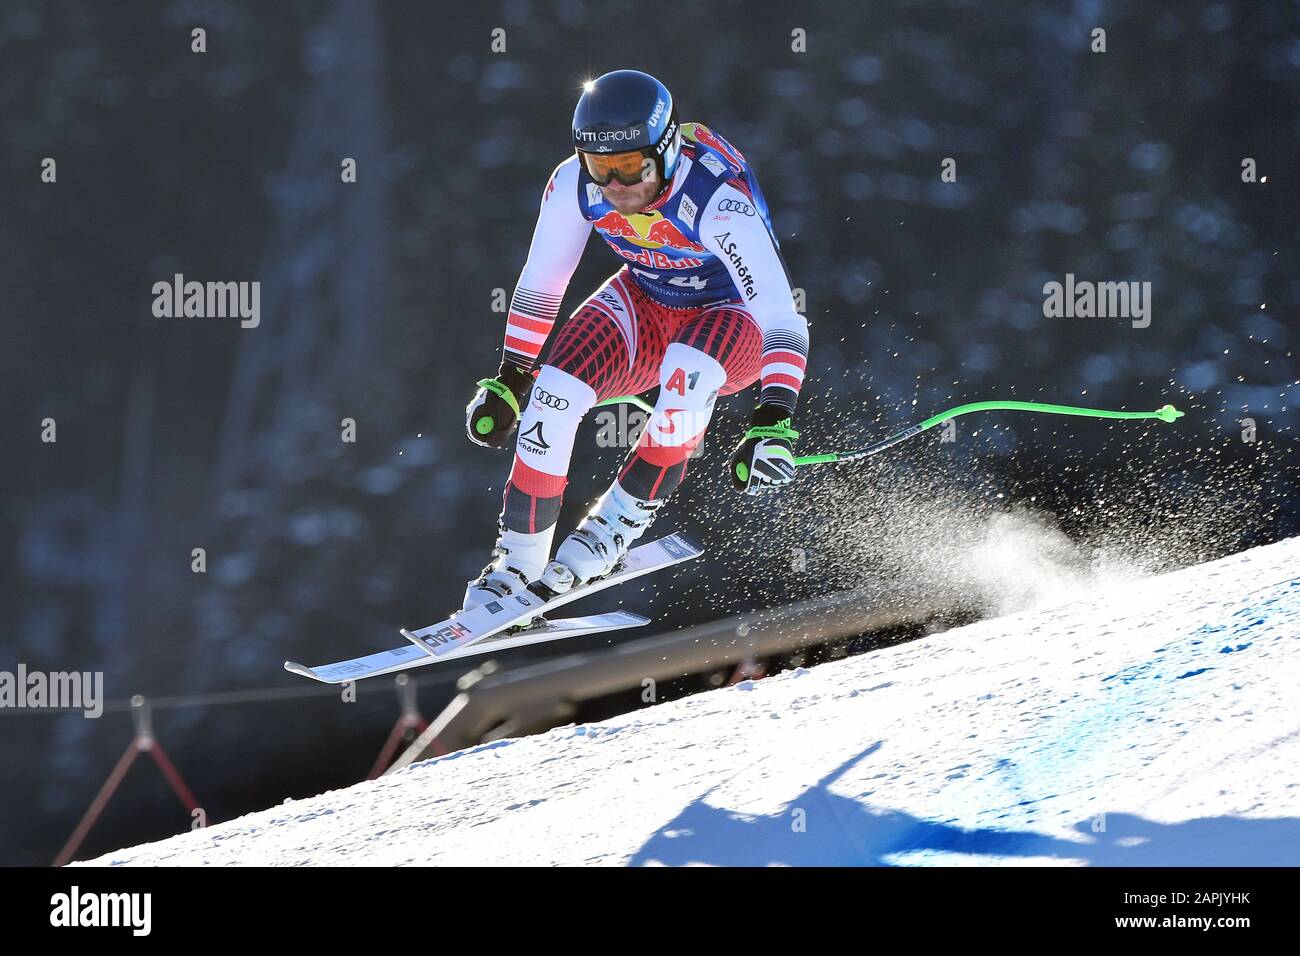 Christian WALDER (AUT), action, alpine skiing, training, 80. Hahnenkamm race 2020, Kitzbuehel, Hahnenkamm, Streif, departure, January 23, 2020 | usage worldwide Stock Photo